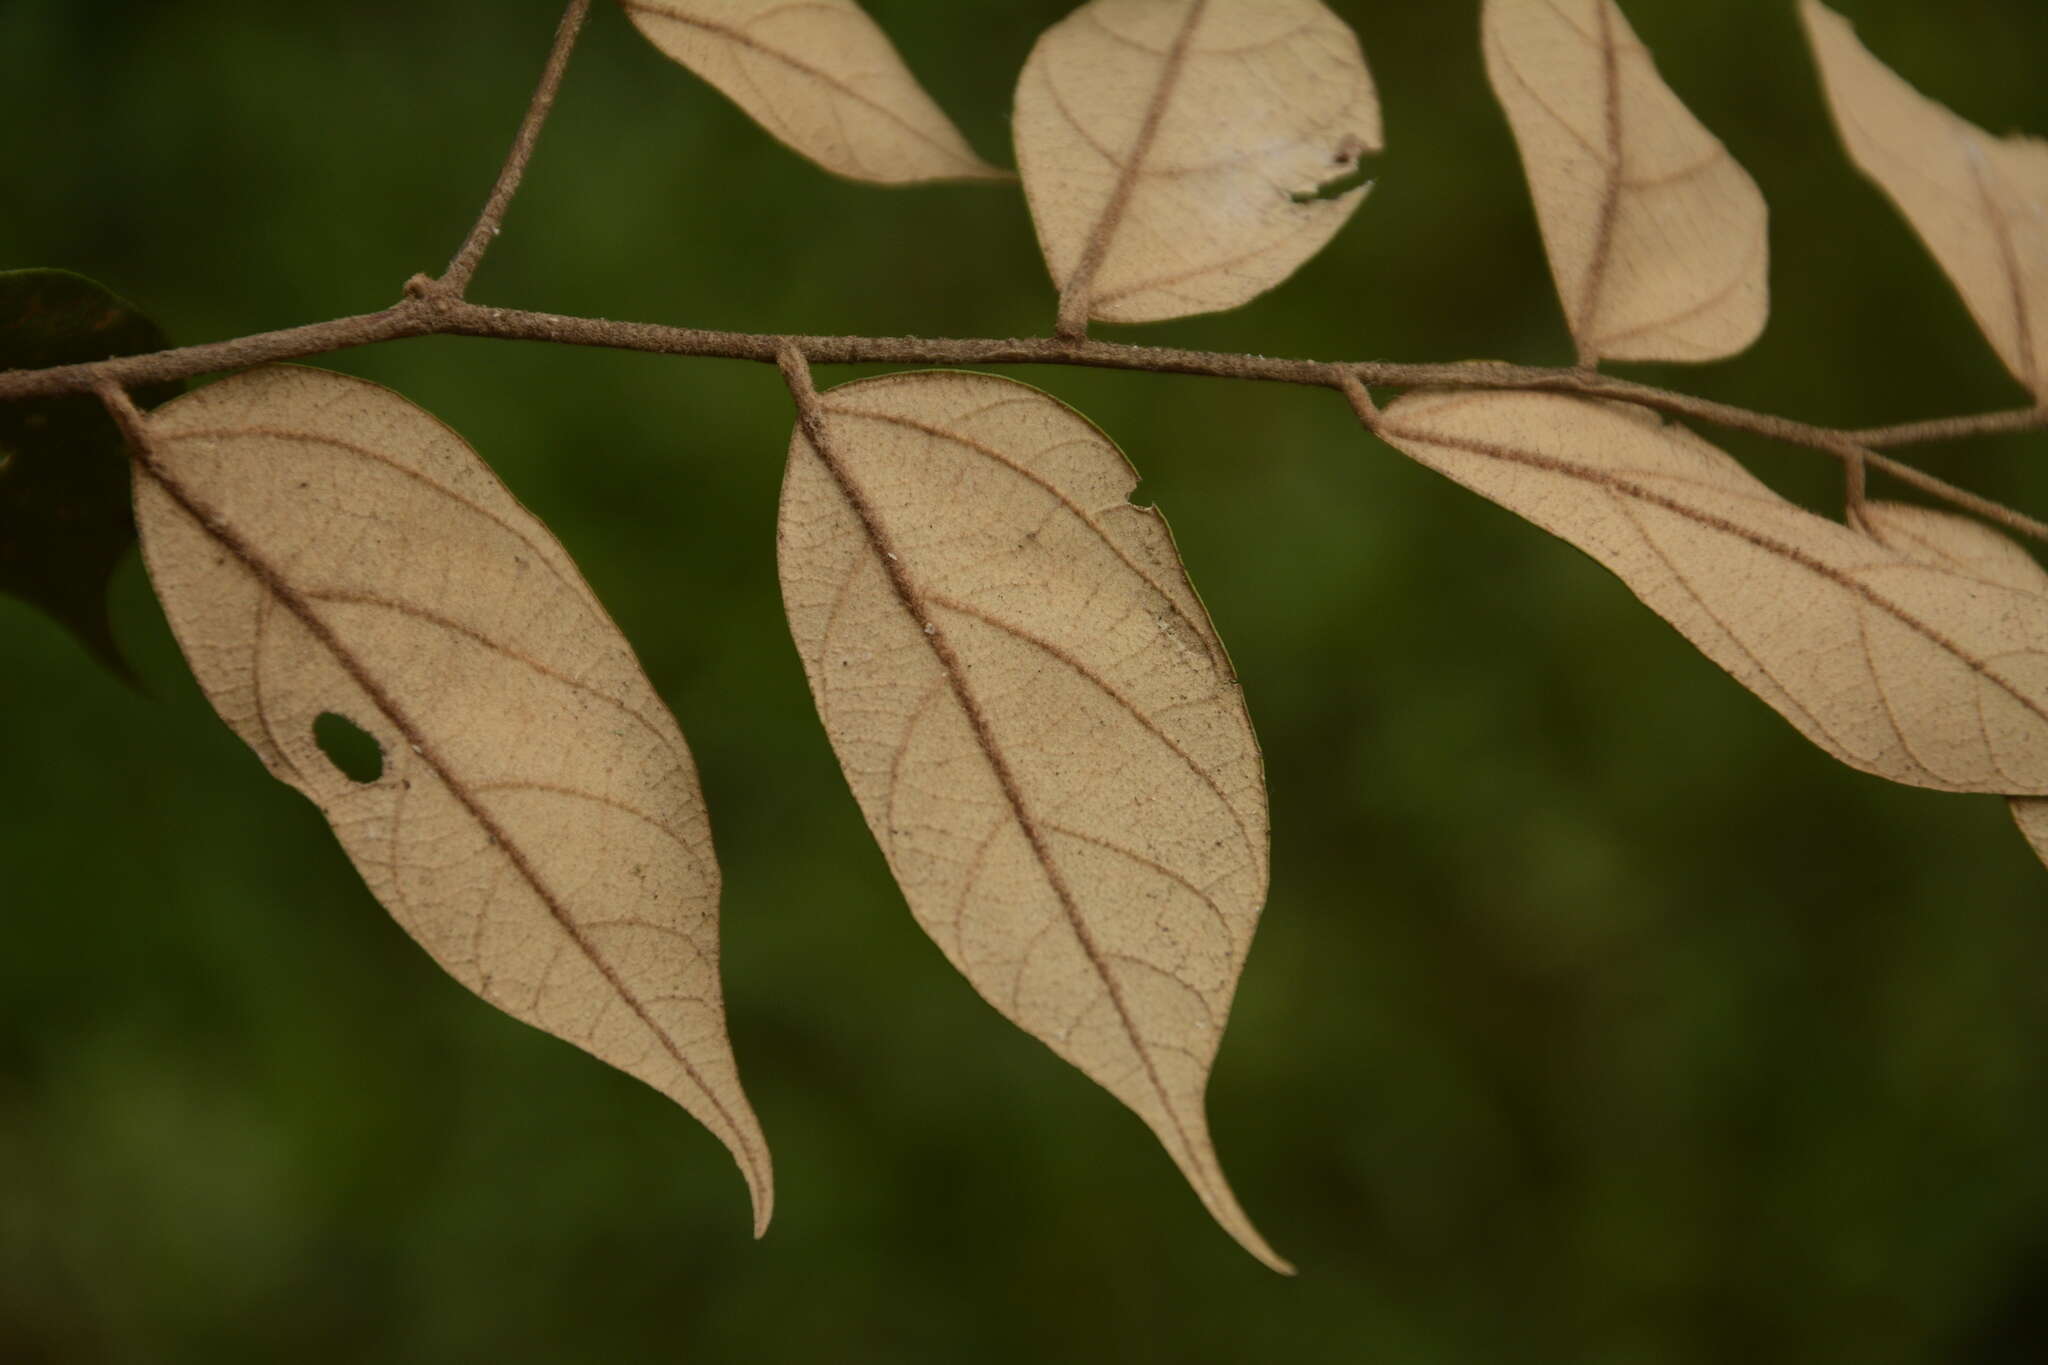 Image de Pterospermum rubiginosum Heyne